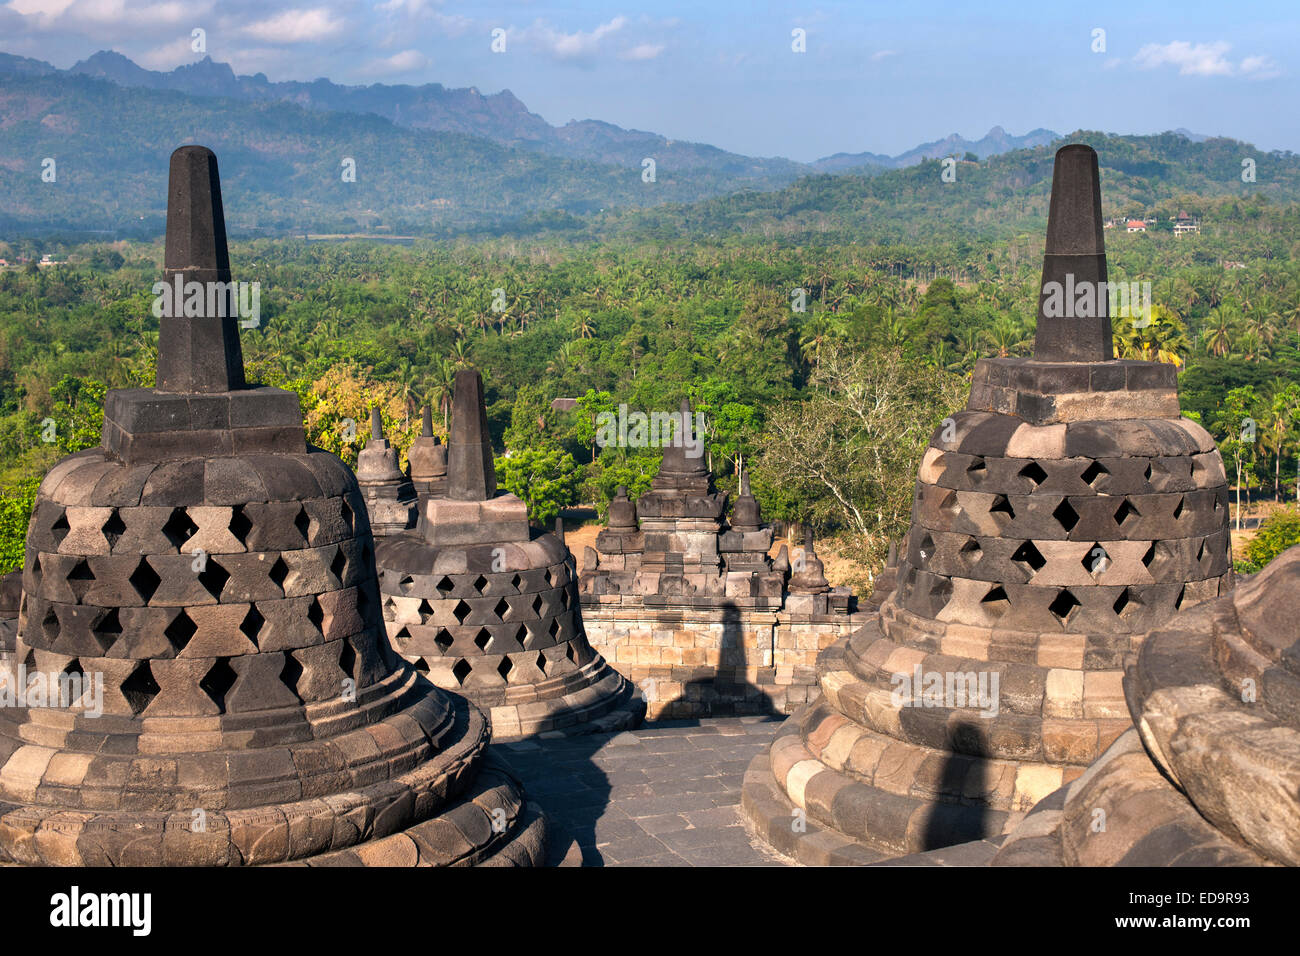 Stupa (bell-shaped ornaments) of Borobodur, a 9th-century Buddhist Temple in Magelang, near Yogyakarta in Java, Indonesia. Stock Photo